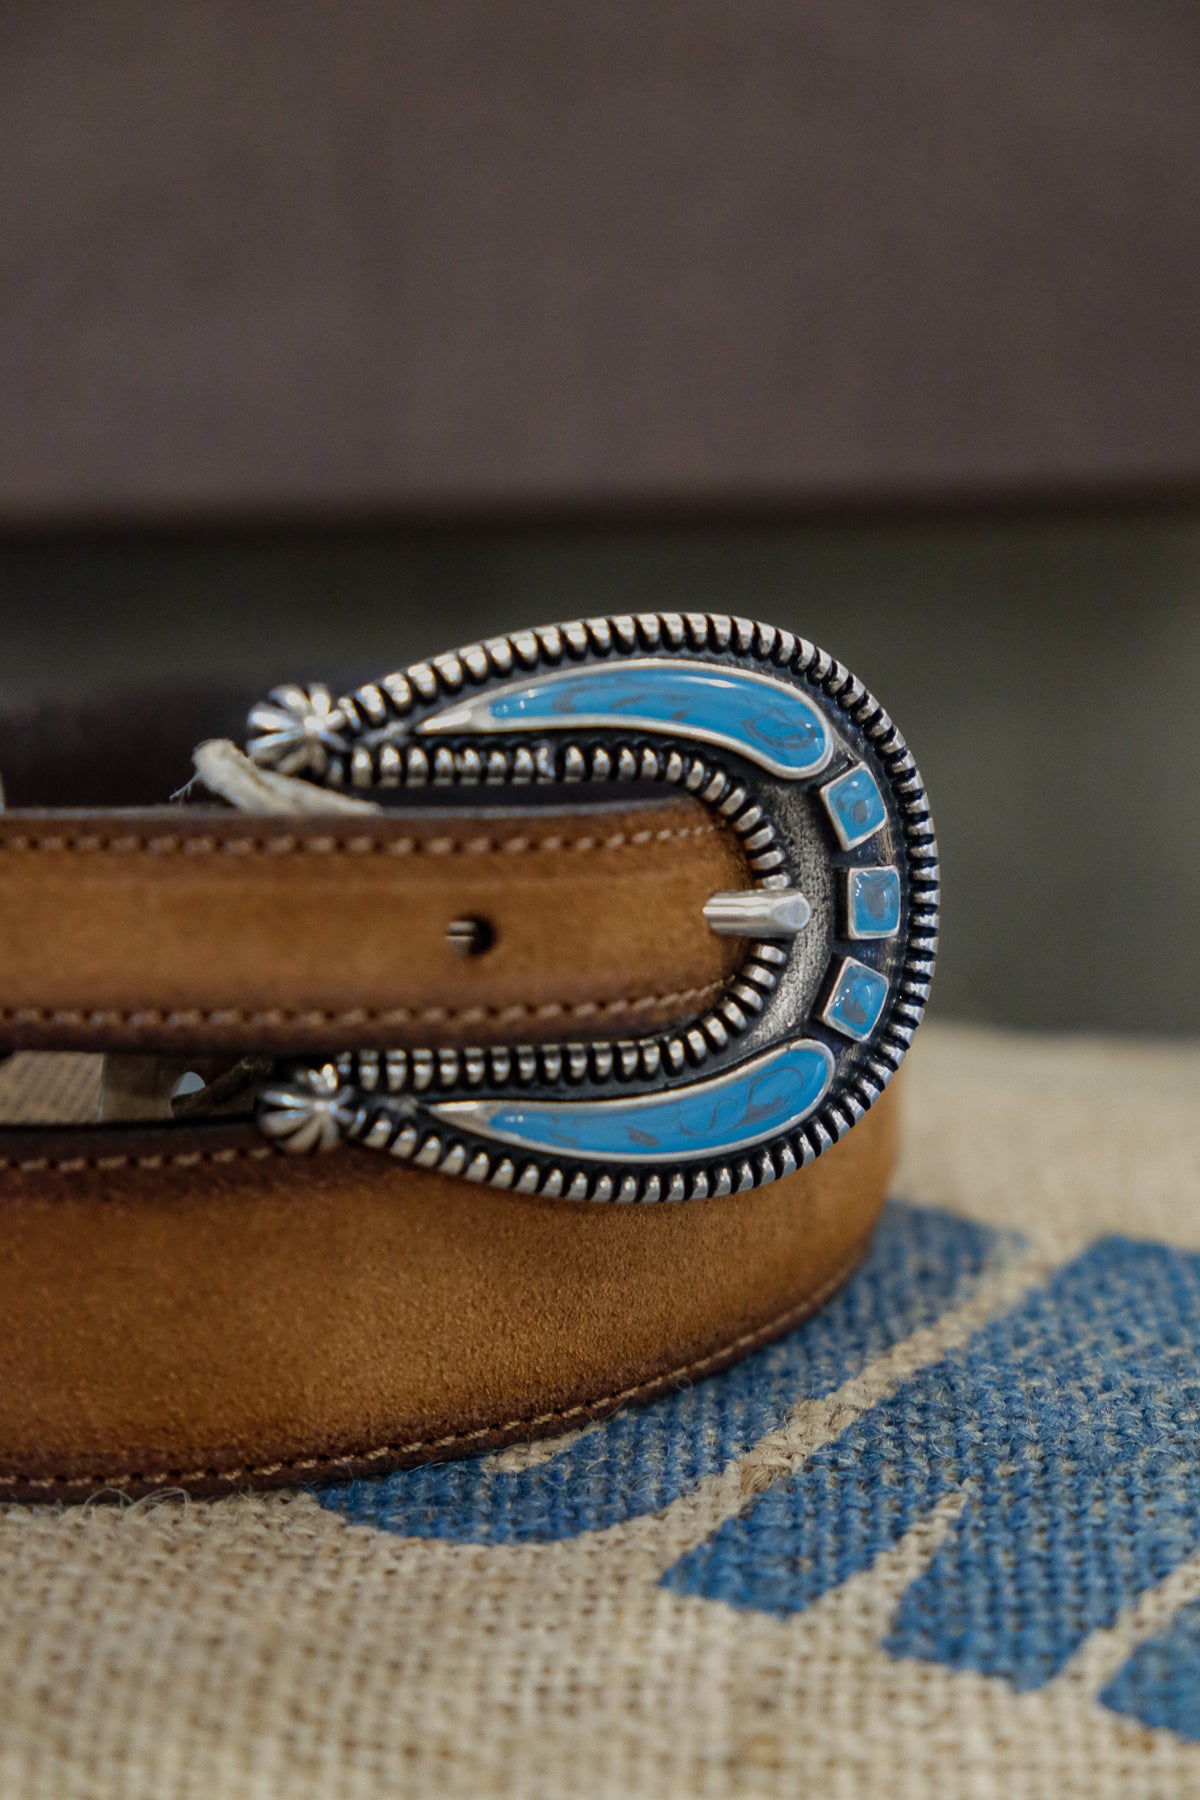 Alberto Luti - Turquoise Jewel Buckle Leather Belt in vintage suede